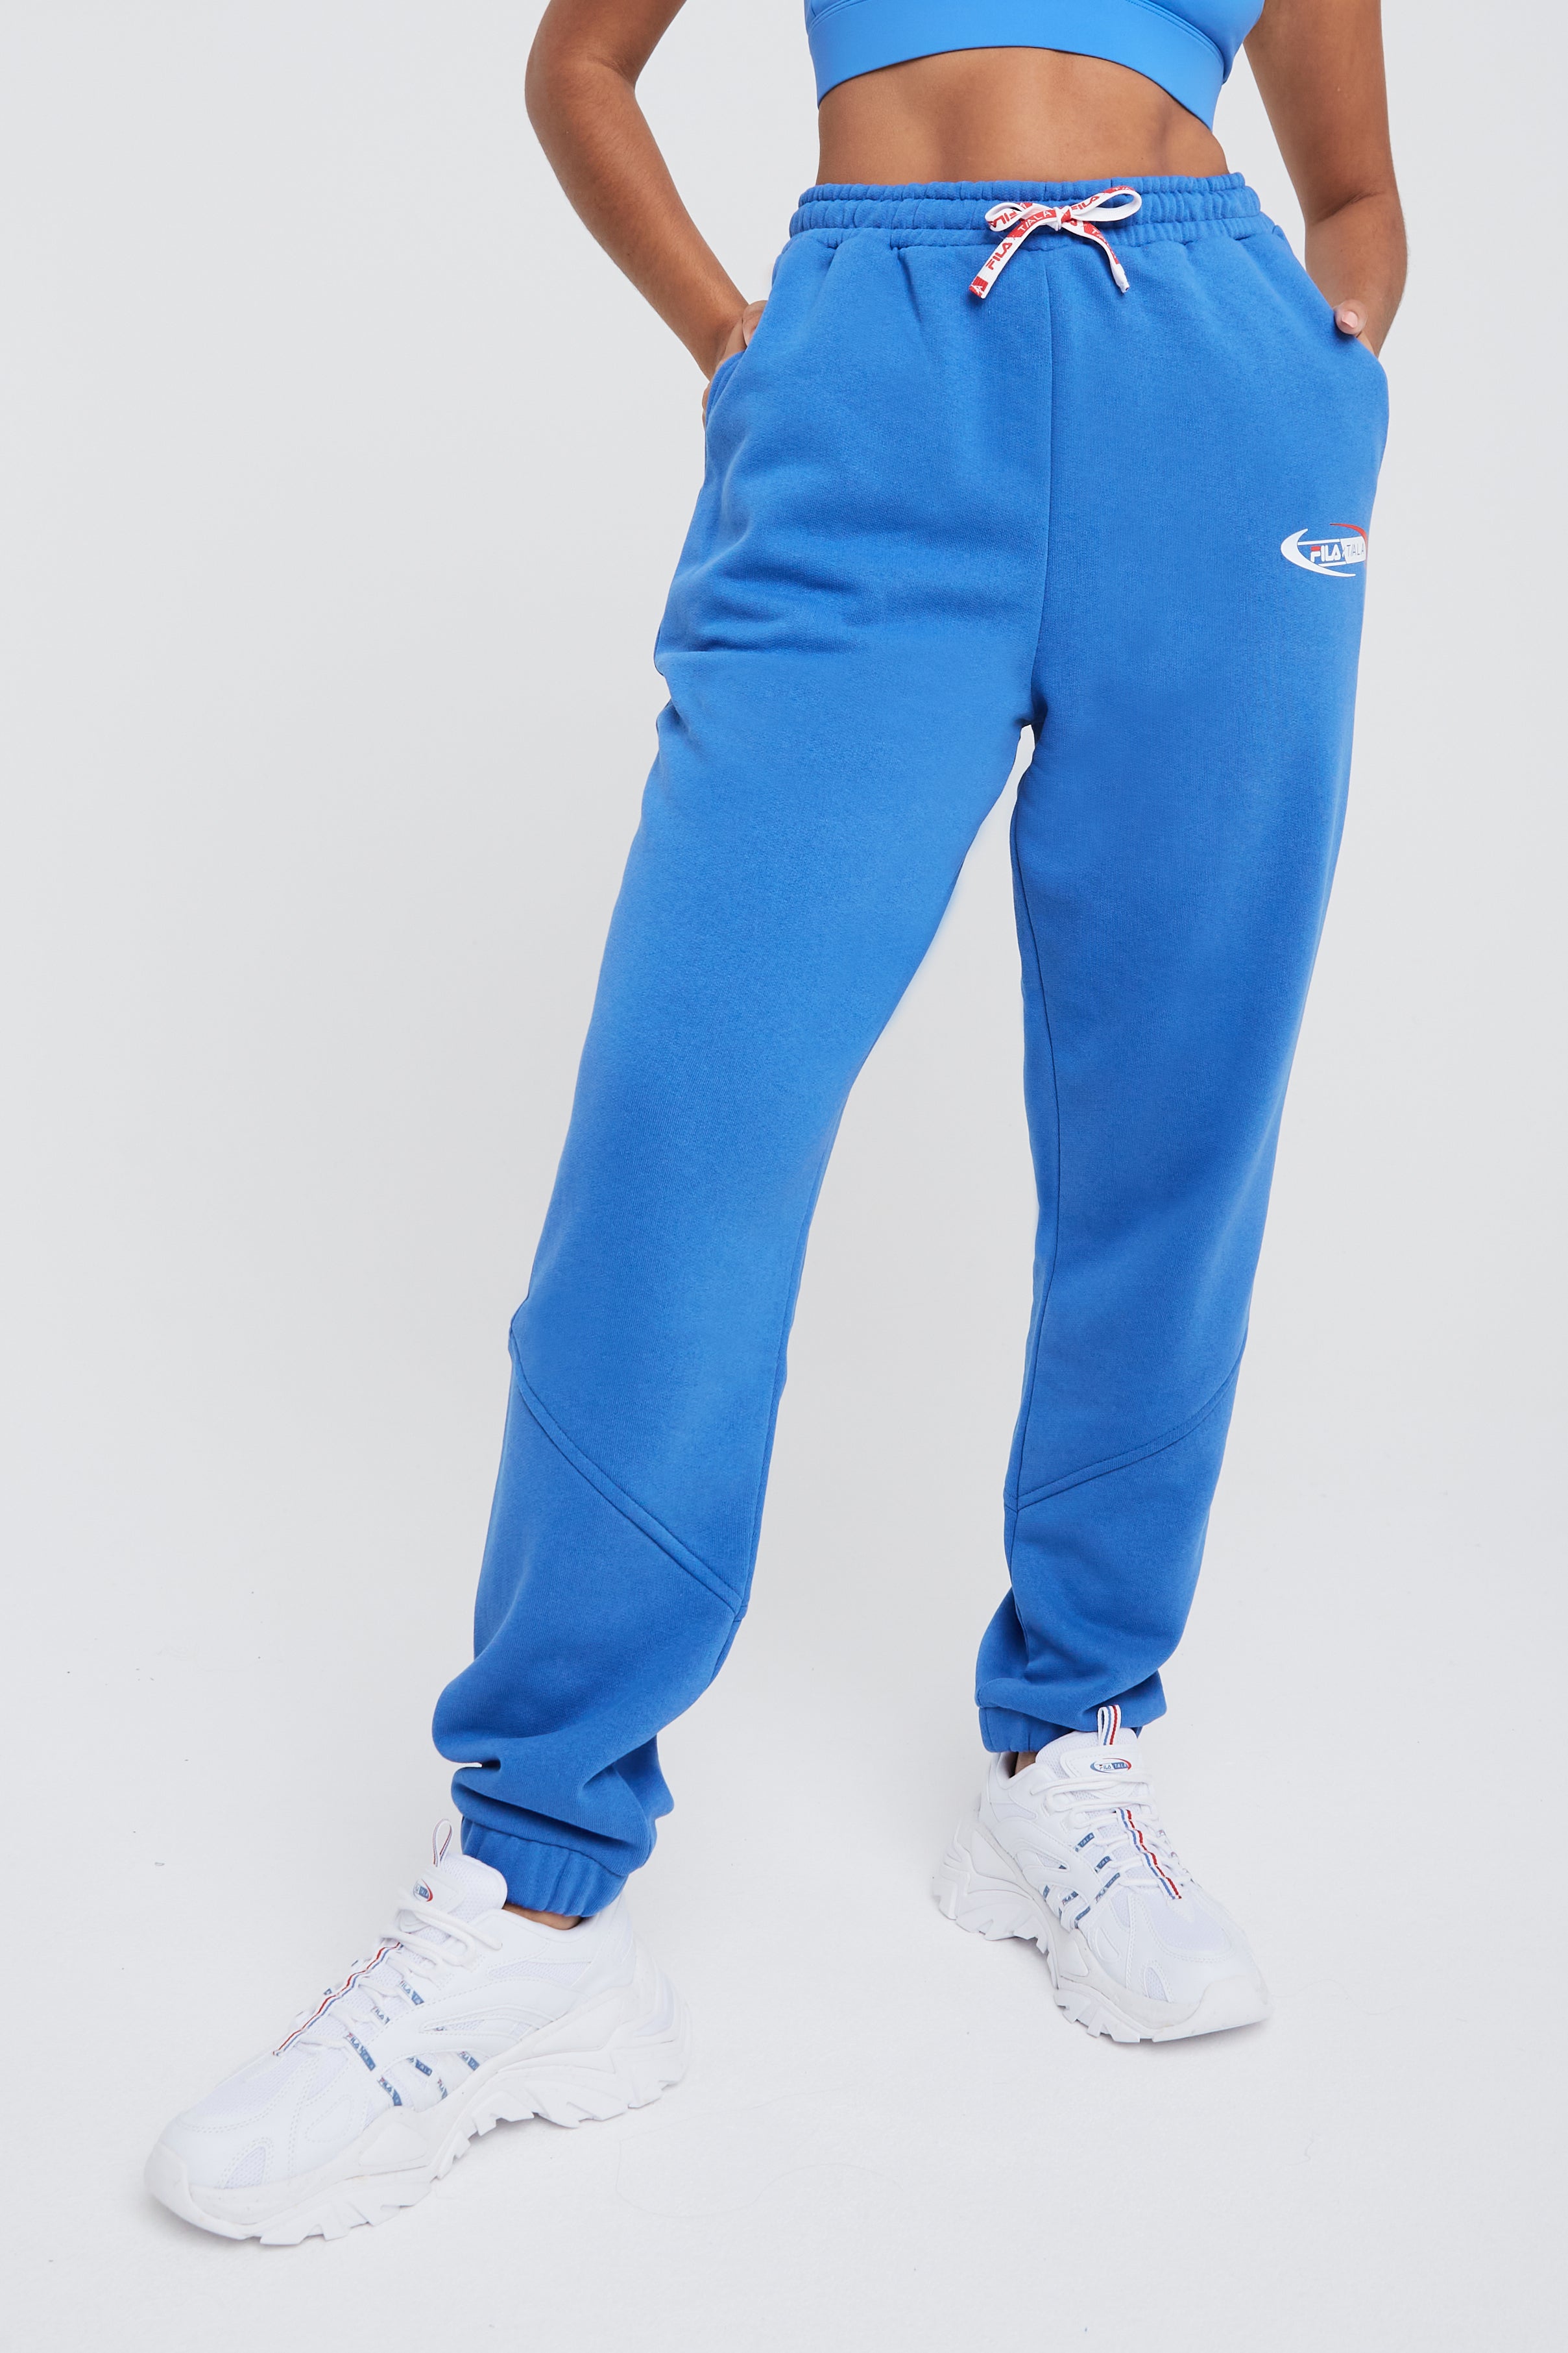 Vintage Men's Fila Track Pants, Blue, Lined, XL, Women's Tracksuit